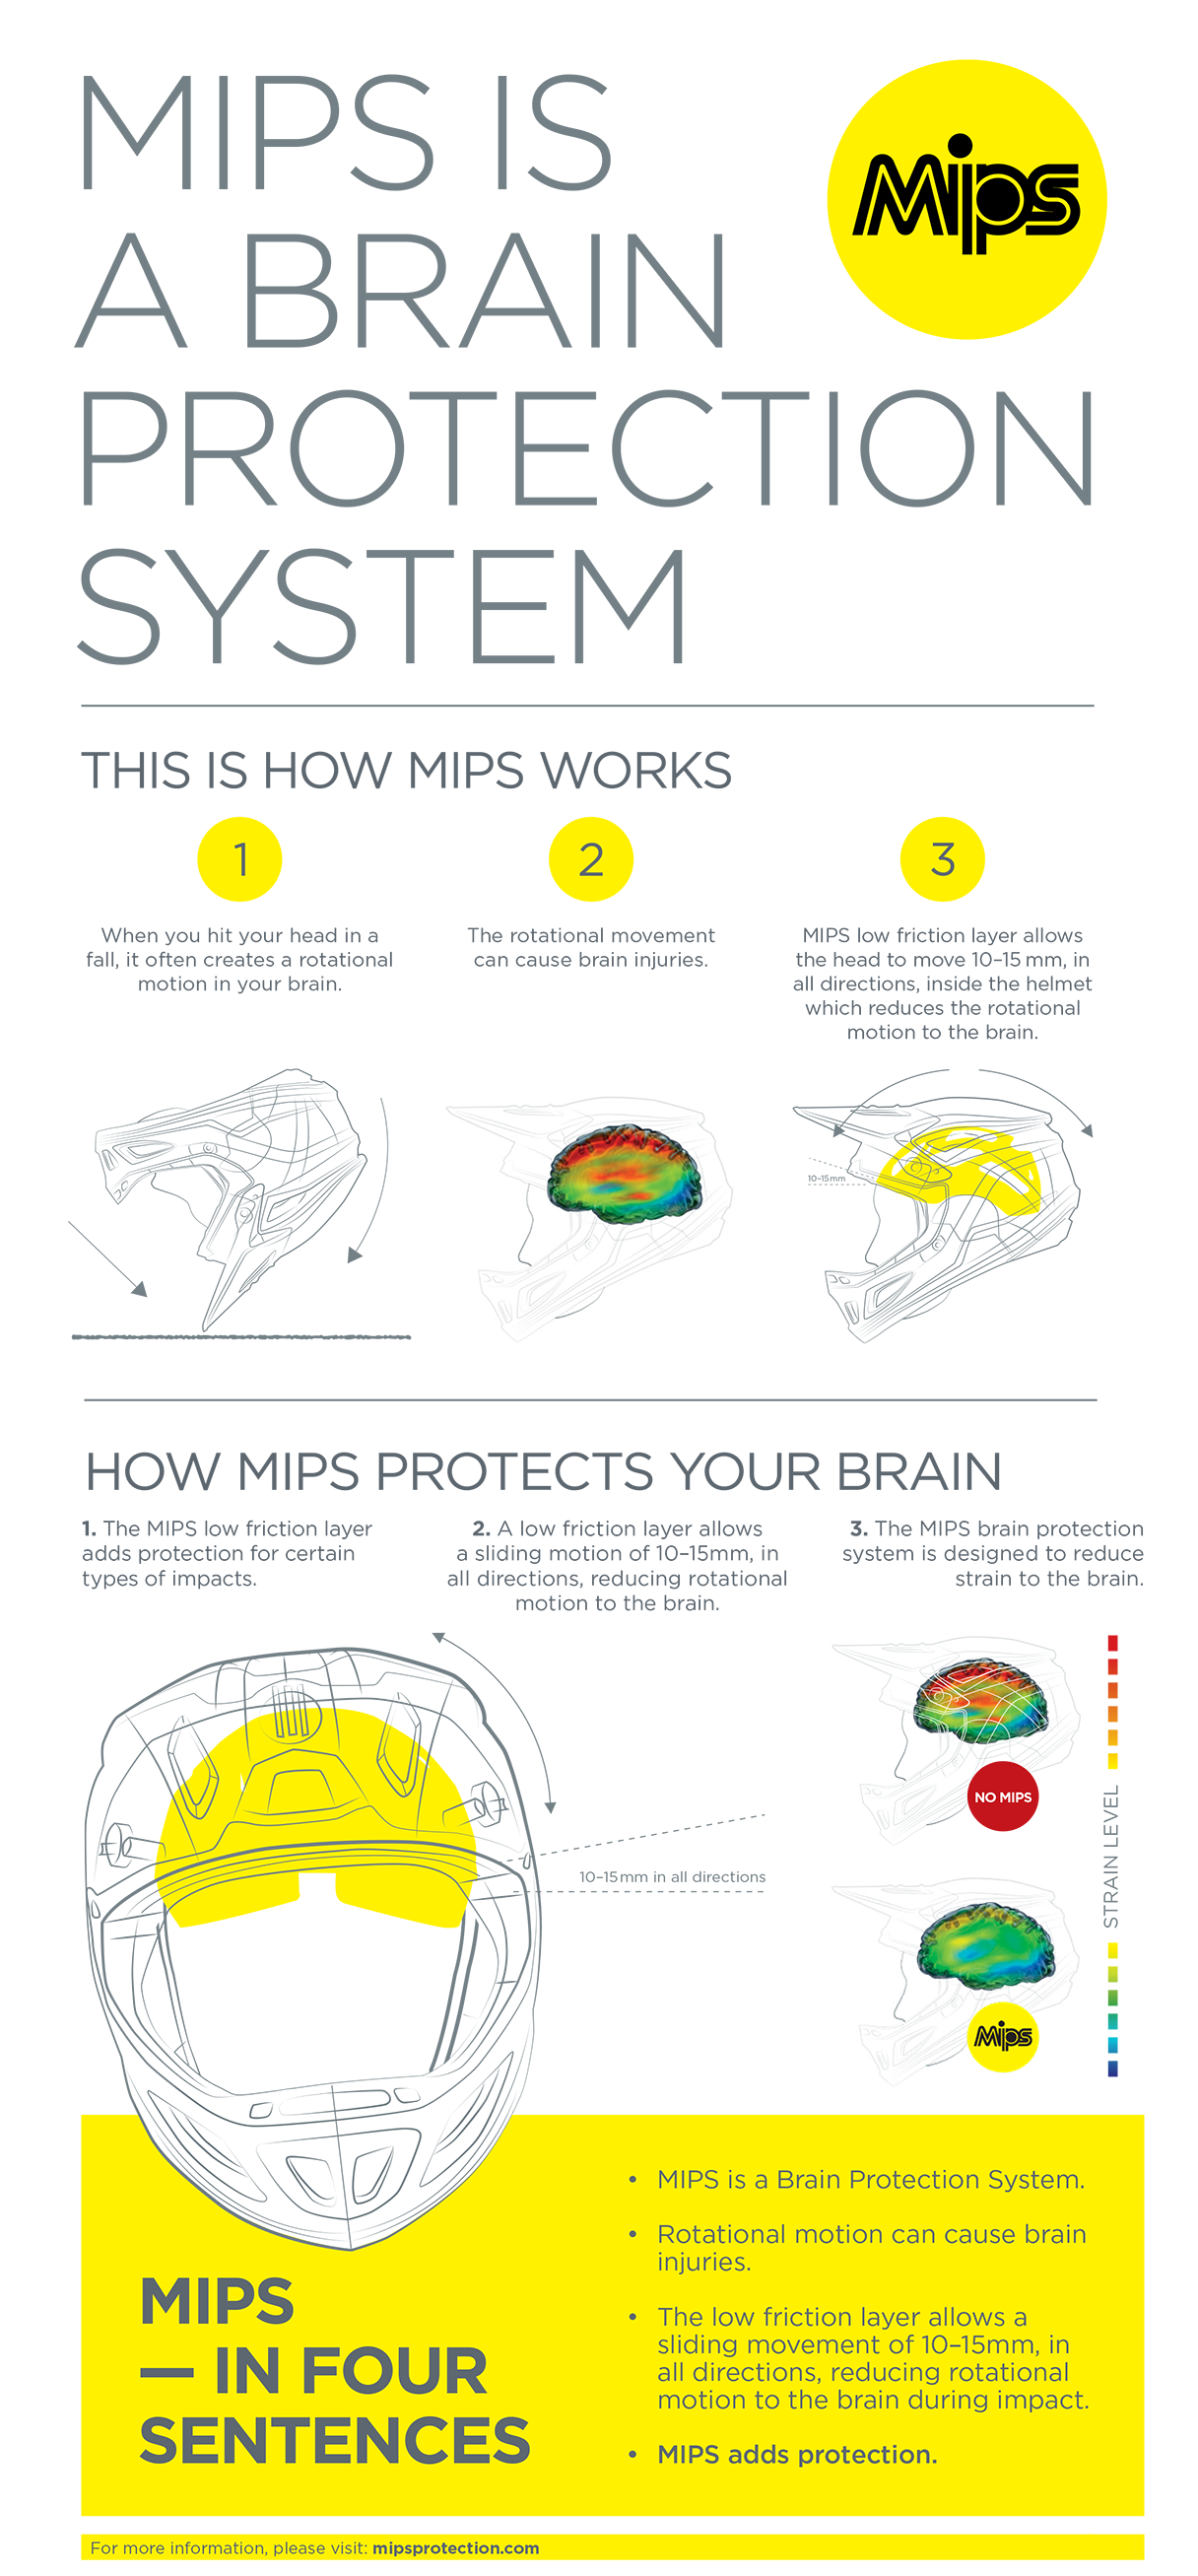 ALPINESTARS Supertech M10 Helmet - Meta 2 - MIPS® - Black/Yellow/Orange - XL 8300422-1549-XL